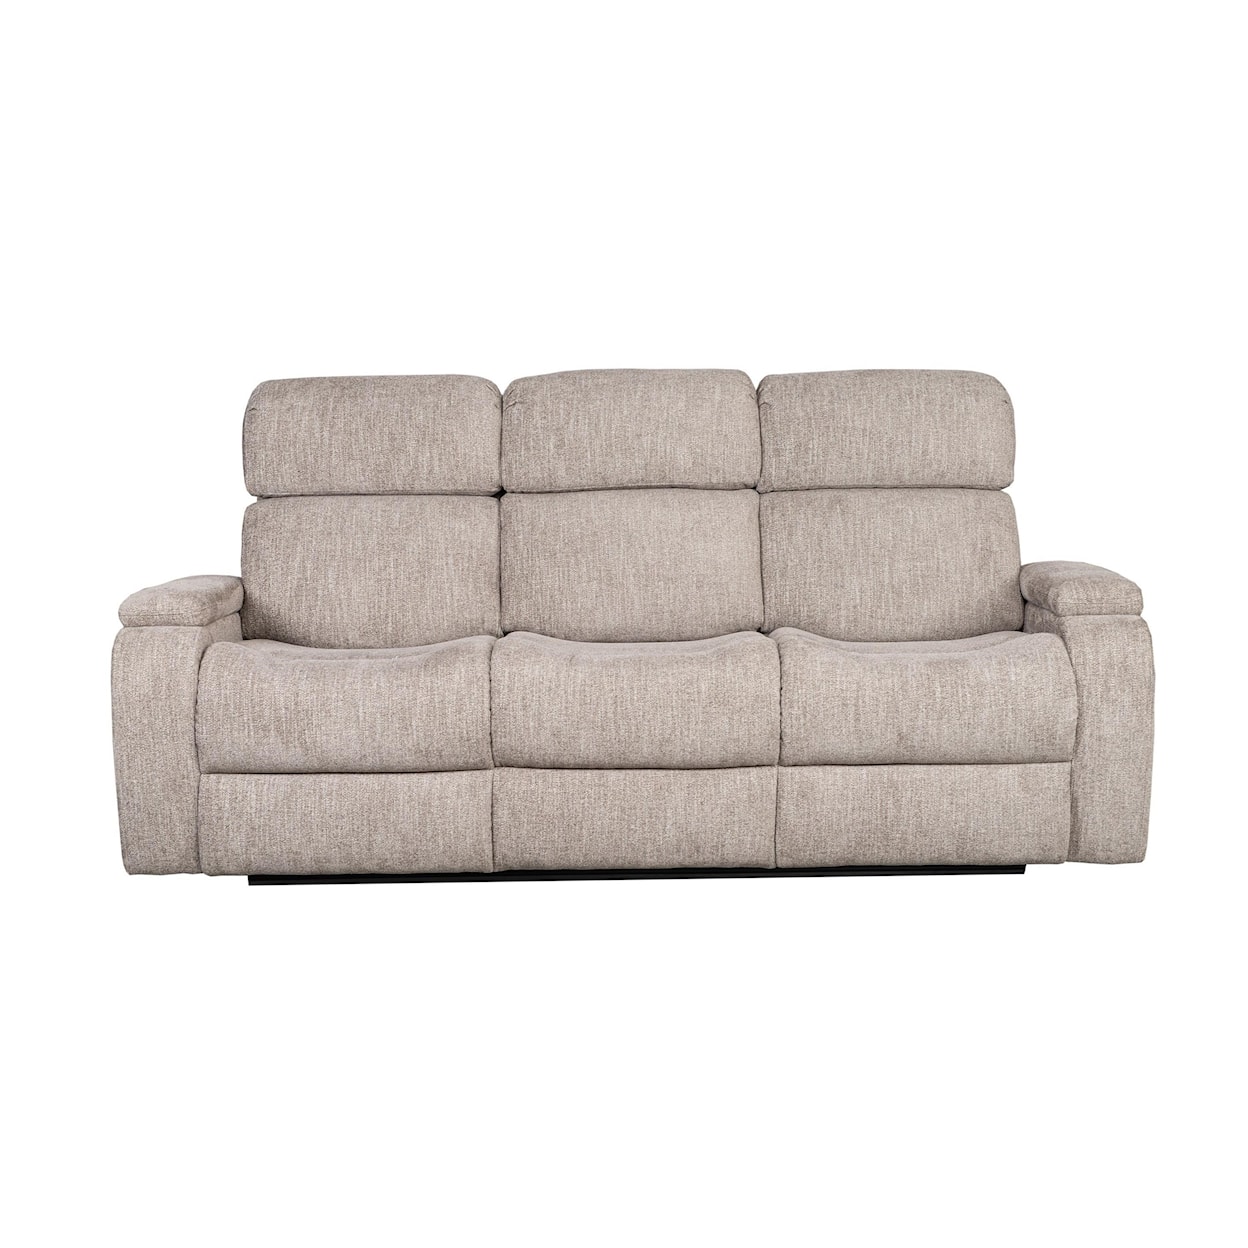 Sarah Randolph Designs 5025 Reclining Sofa